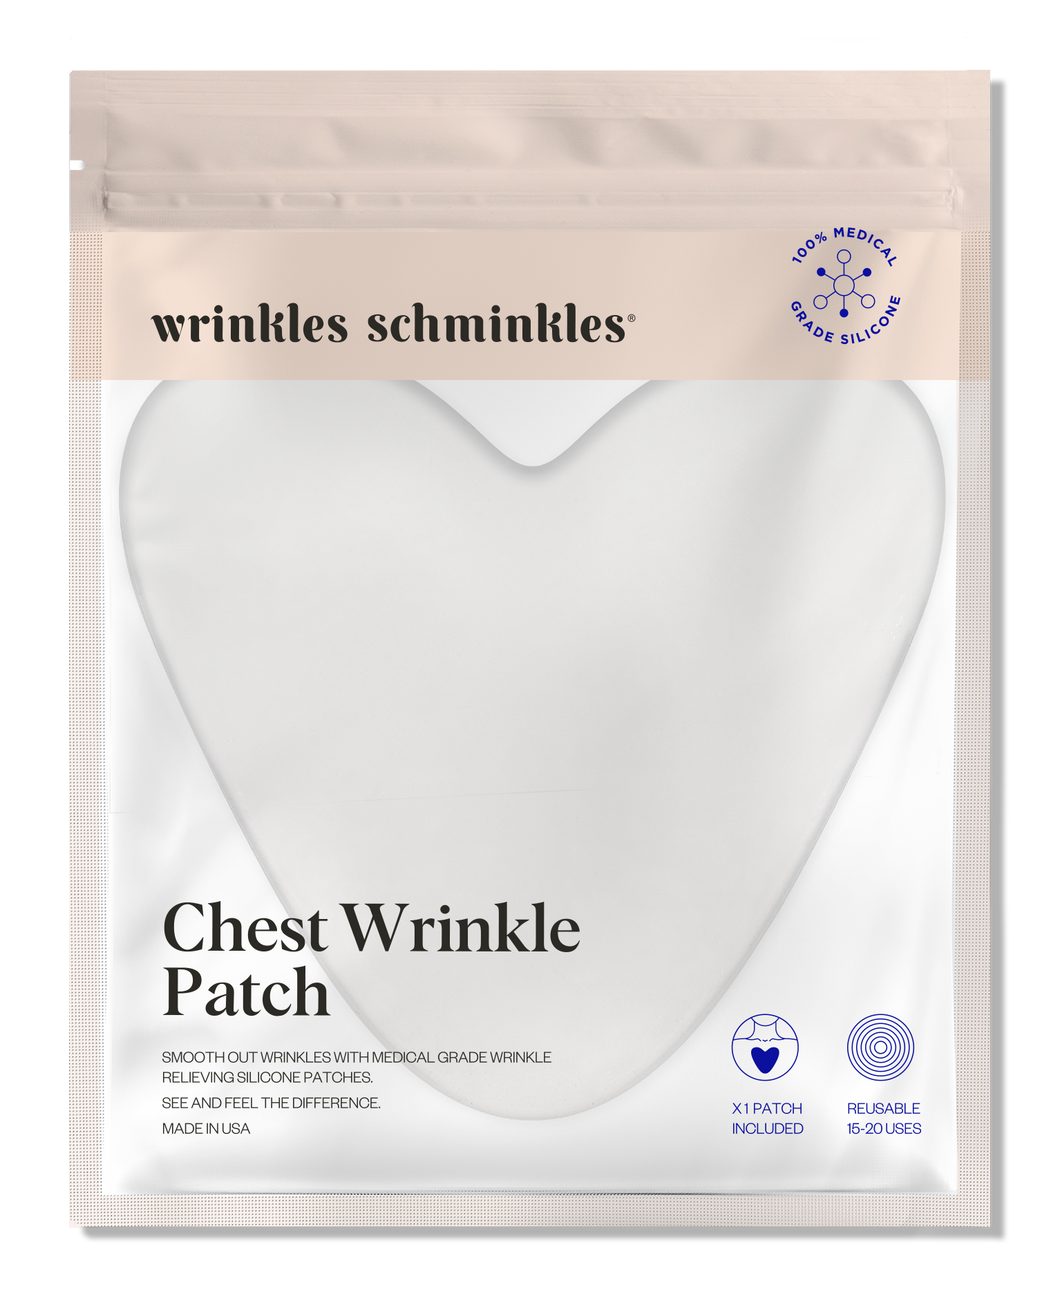 Wrinkle Schminkles- Anti wrinkle chest patch